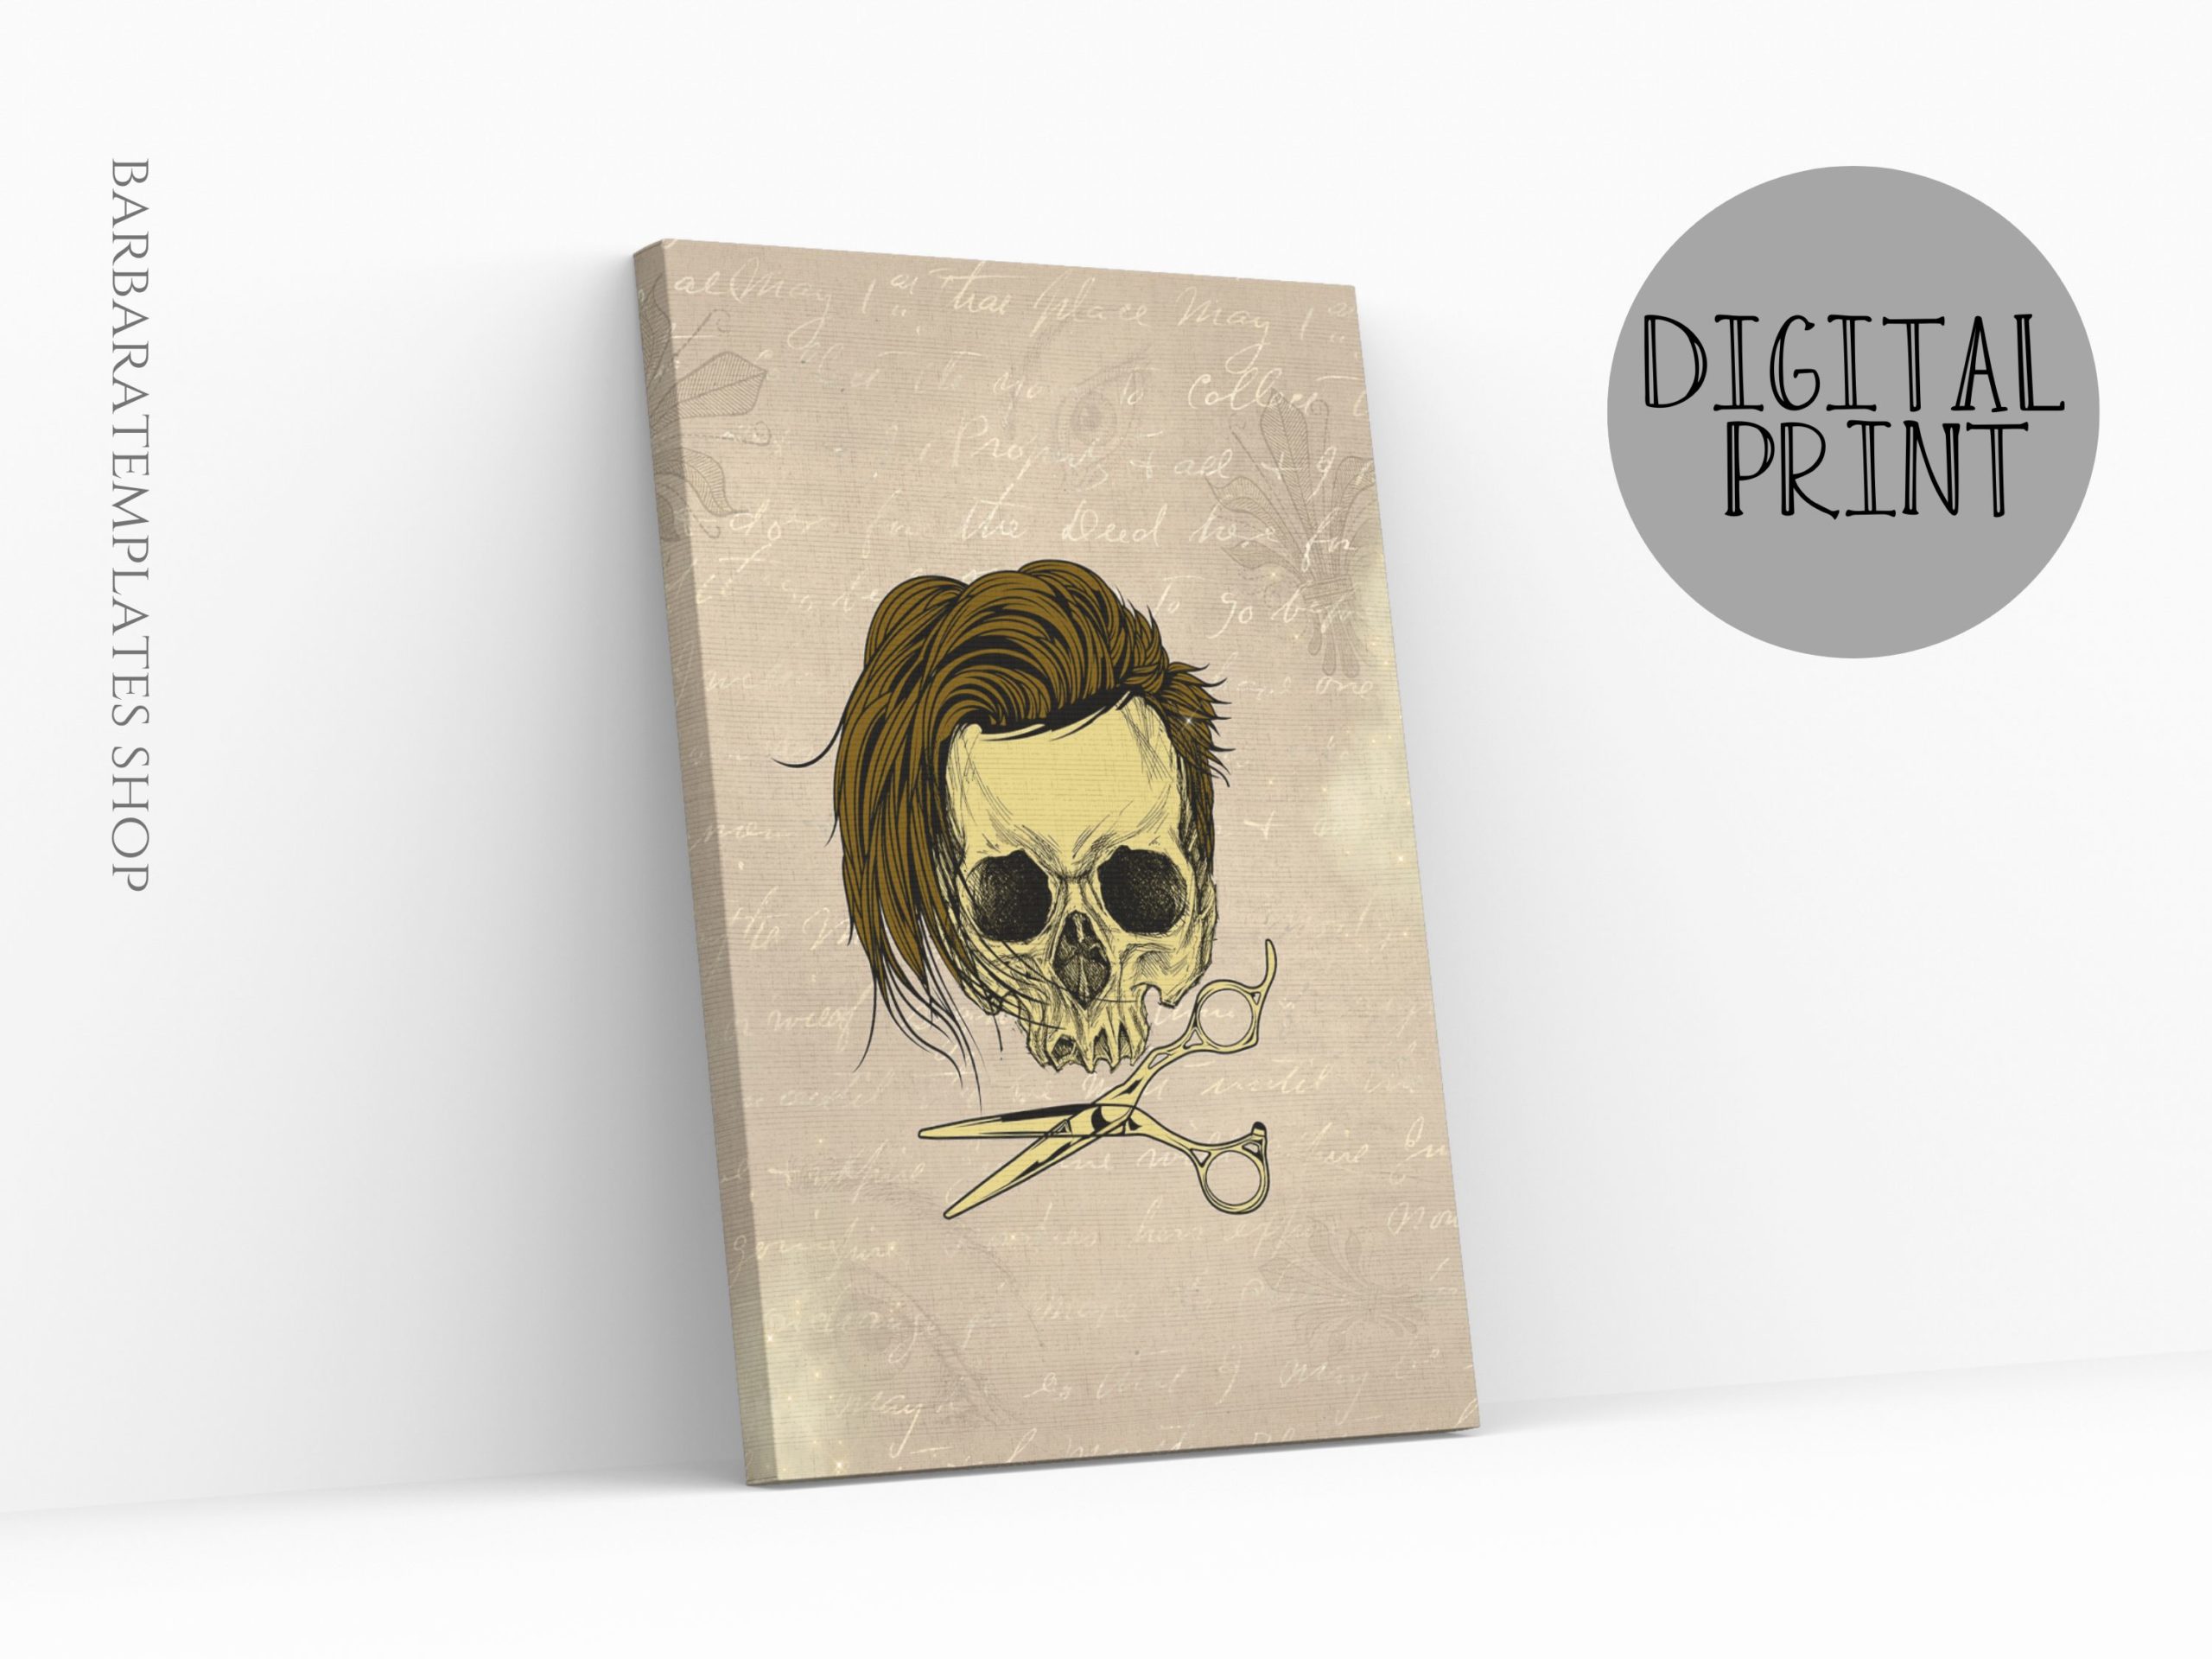 Goth human skull hairdresser digital print